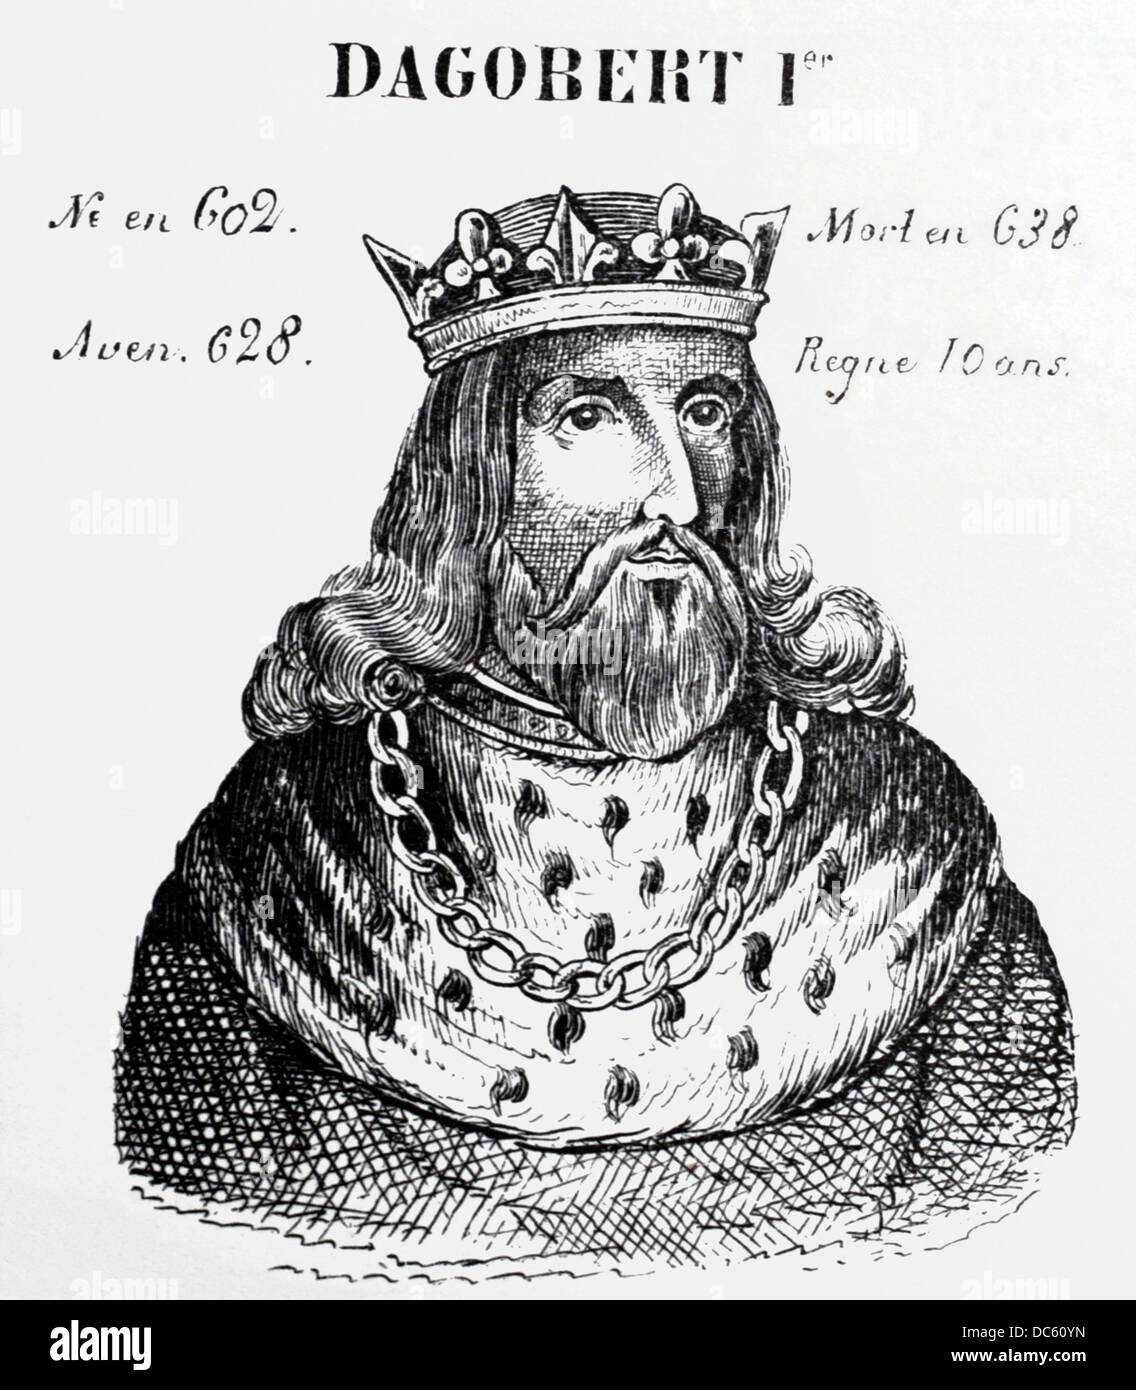 Dagobert 1st, rey de Francia desde 628 a 638. Historia de Francia, por J.Henry (1842) Foto de stock